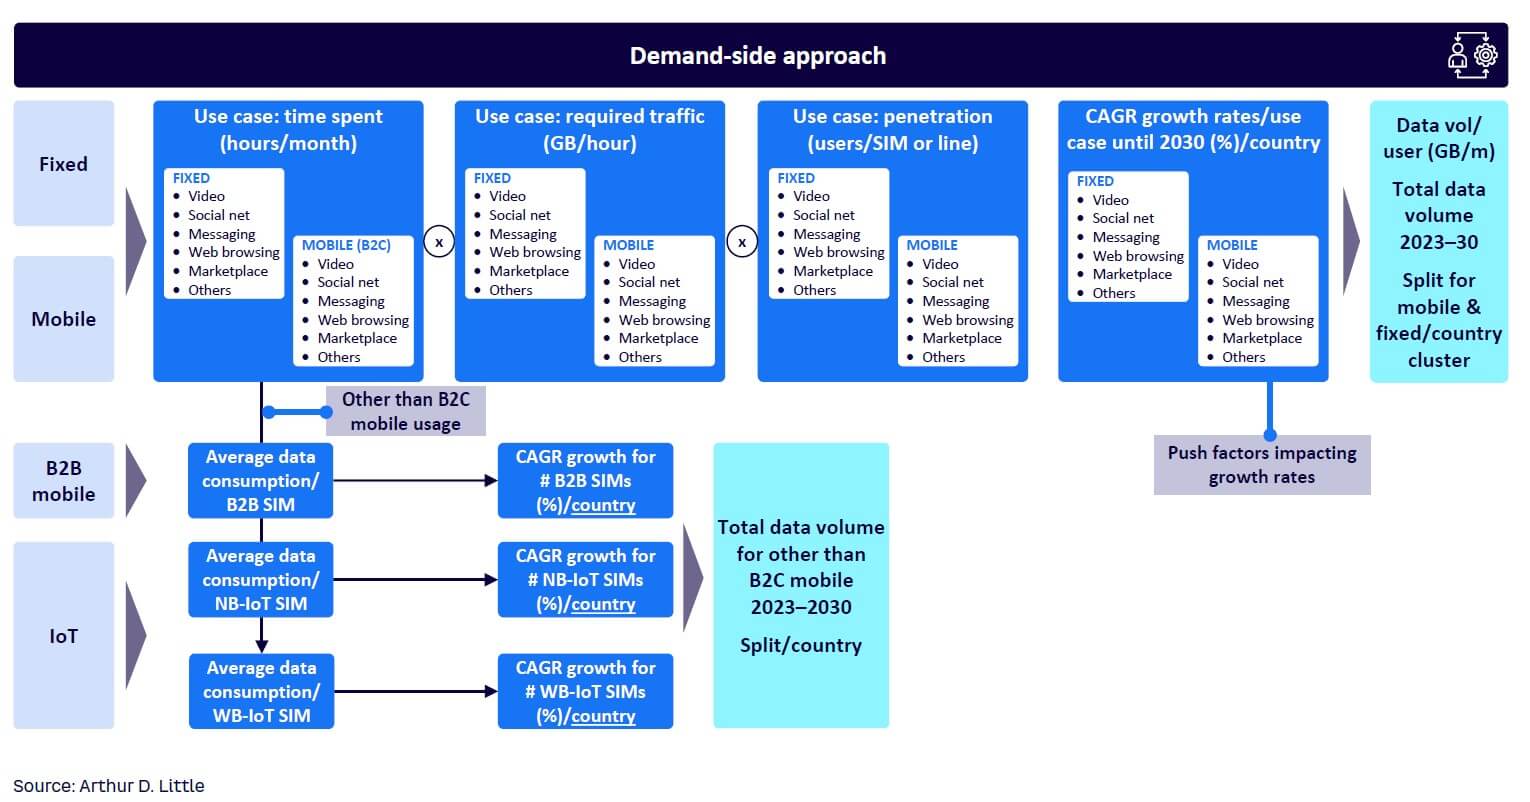 Figure 6. Model structure: demand-side approach